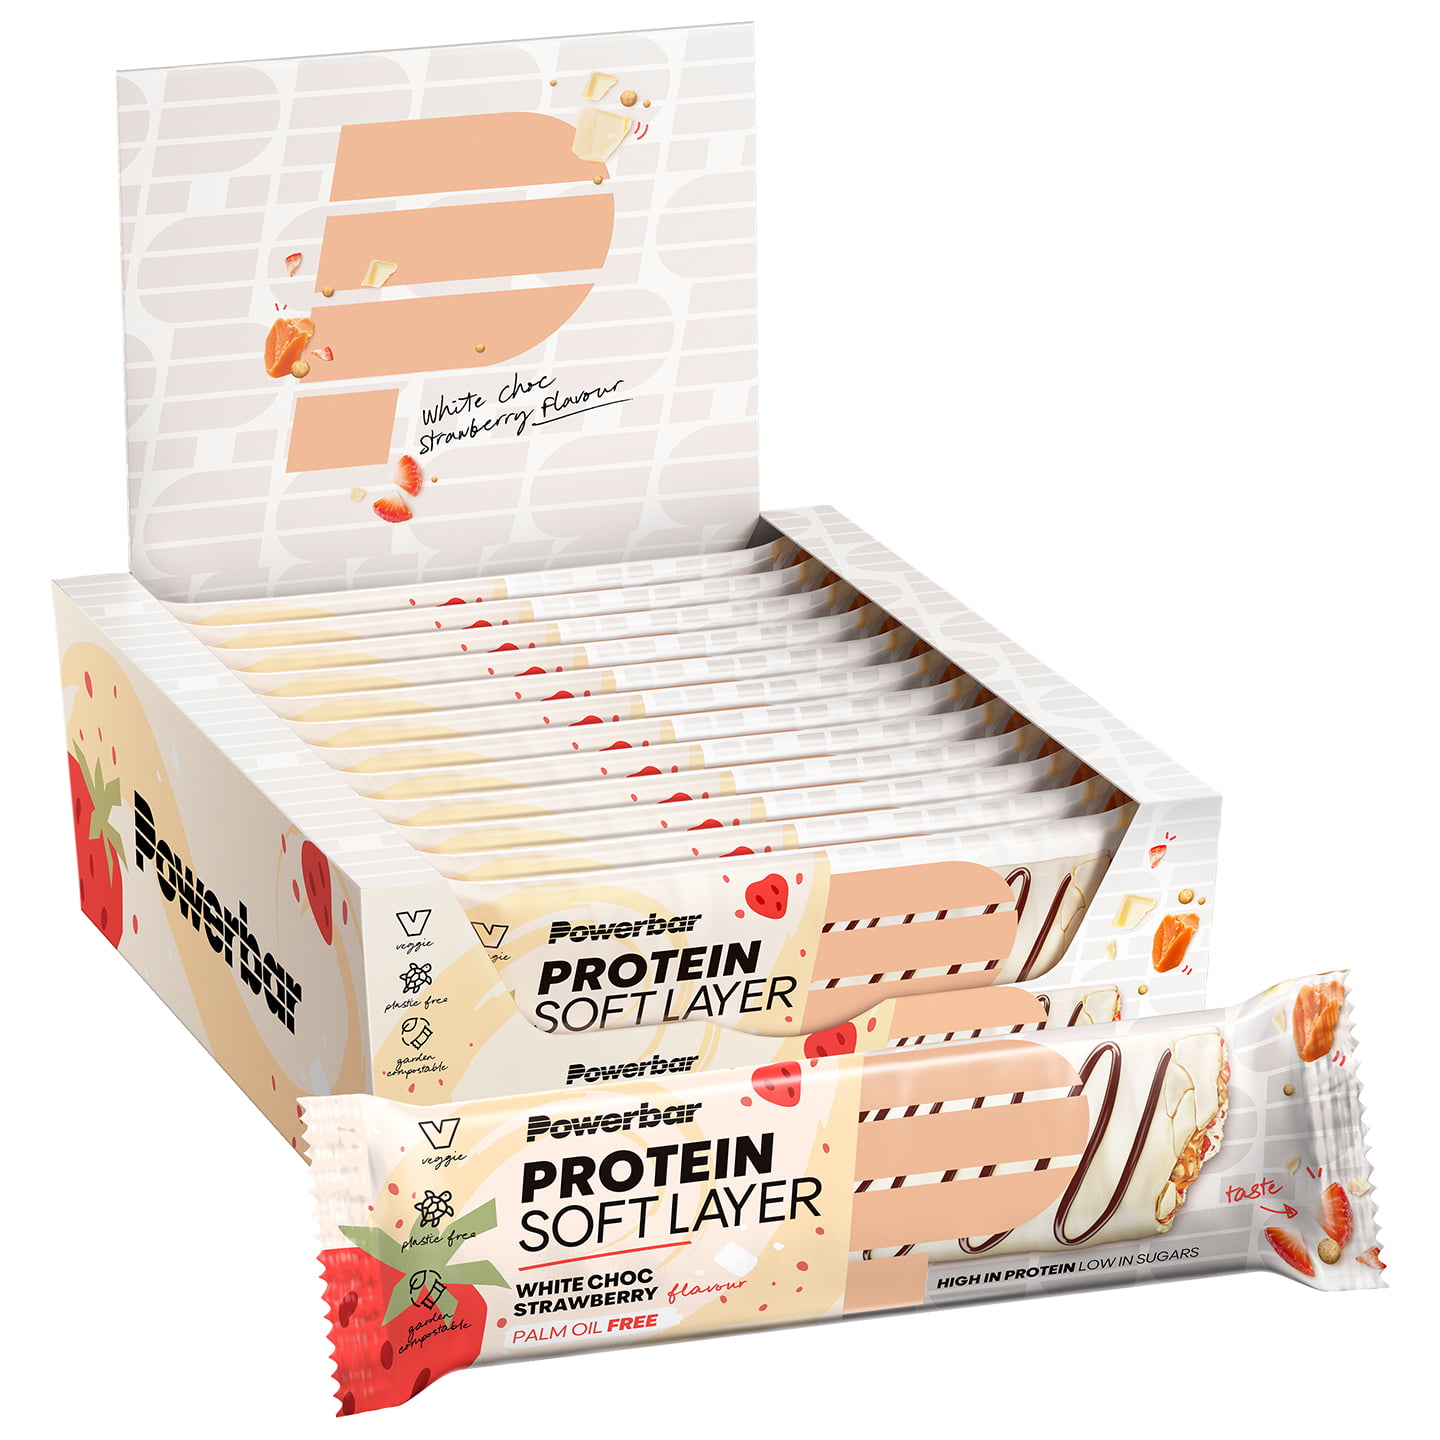 POWERBAR Protein Soft Layer Riege White Choc Strawb 12 Bars per Box Bar, Sports food